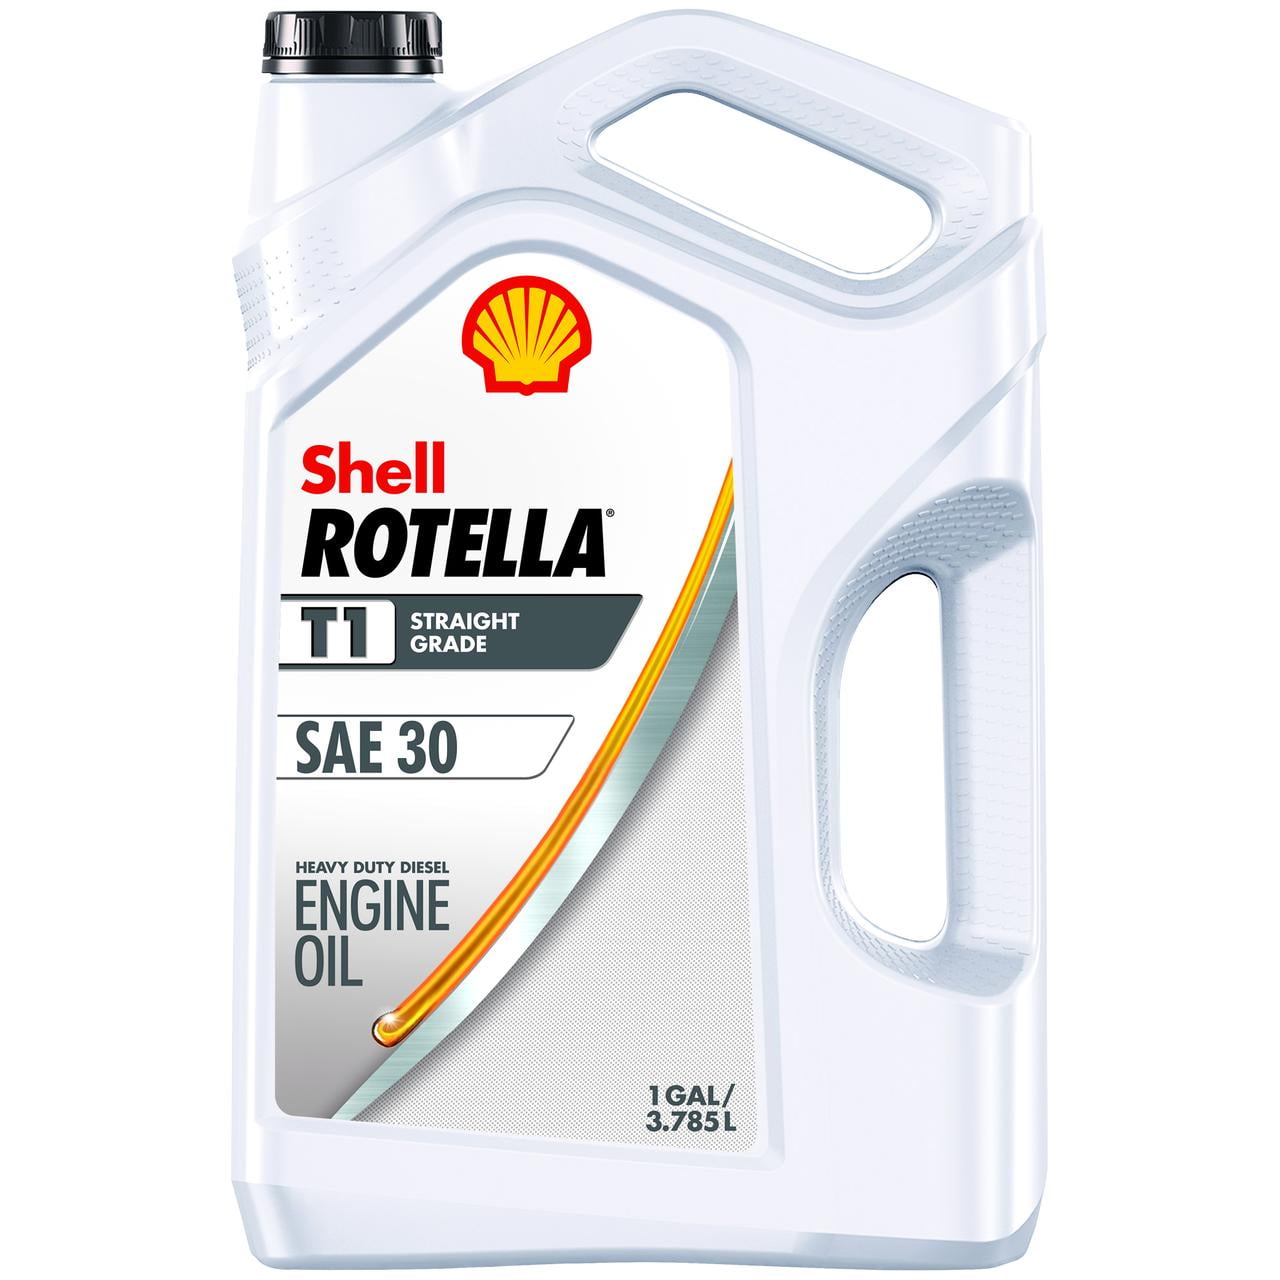 Shell Rotella T1 30W Conventional Heavy Duty Diesel Motor Oil, 1 Gallon